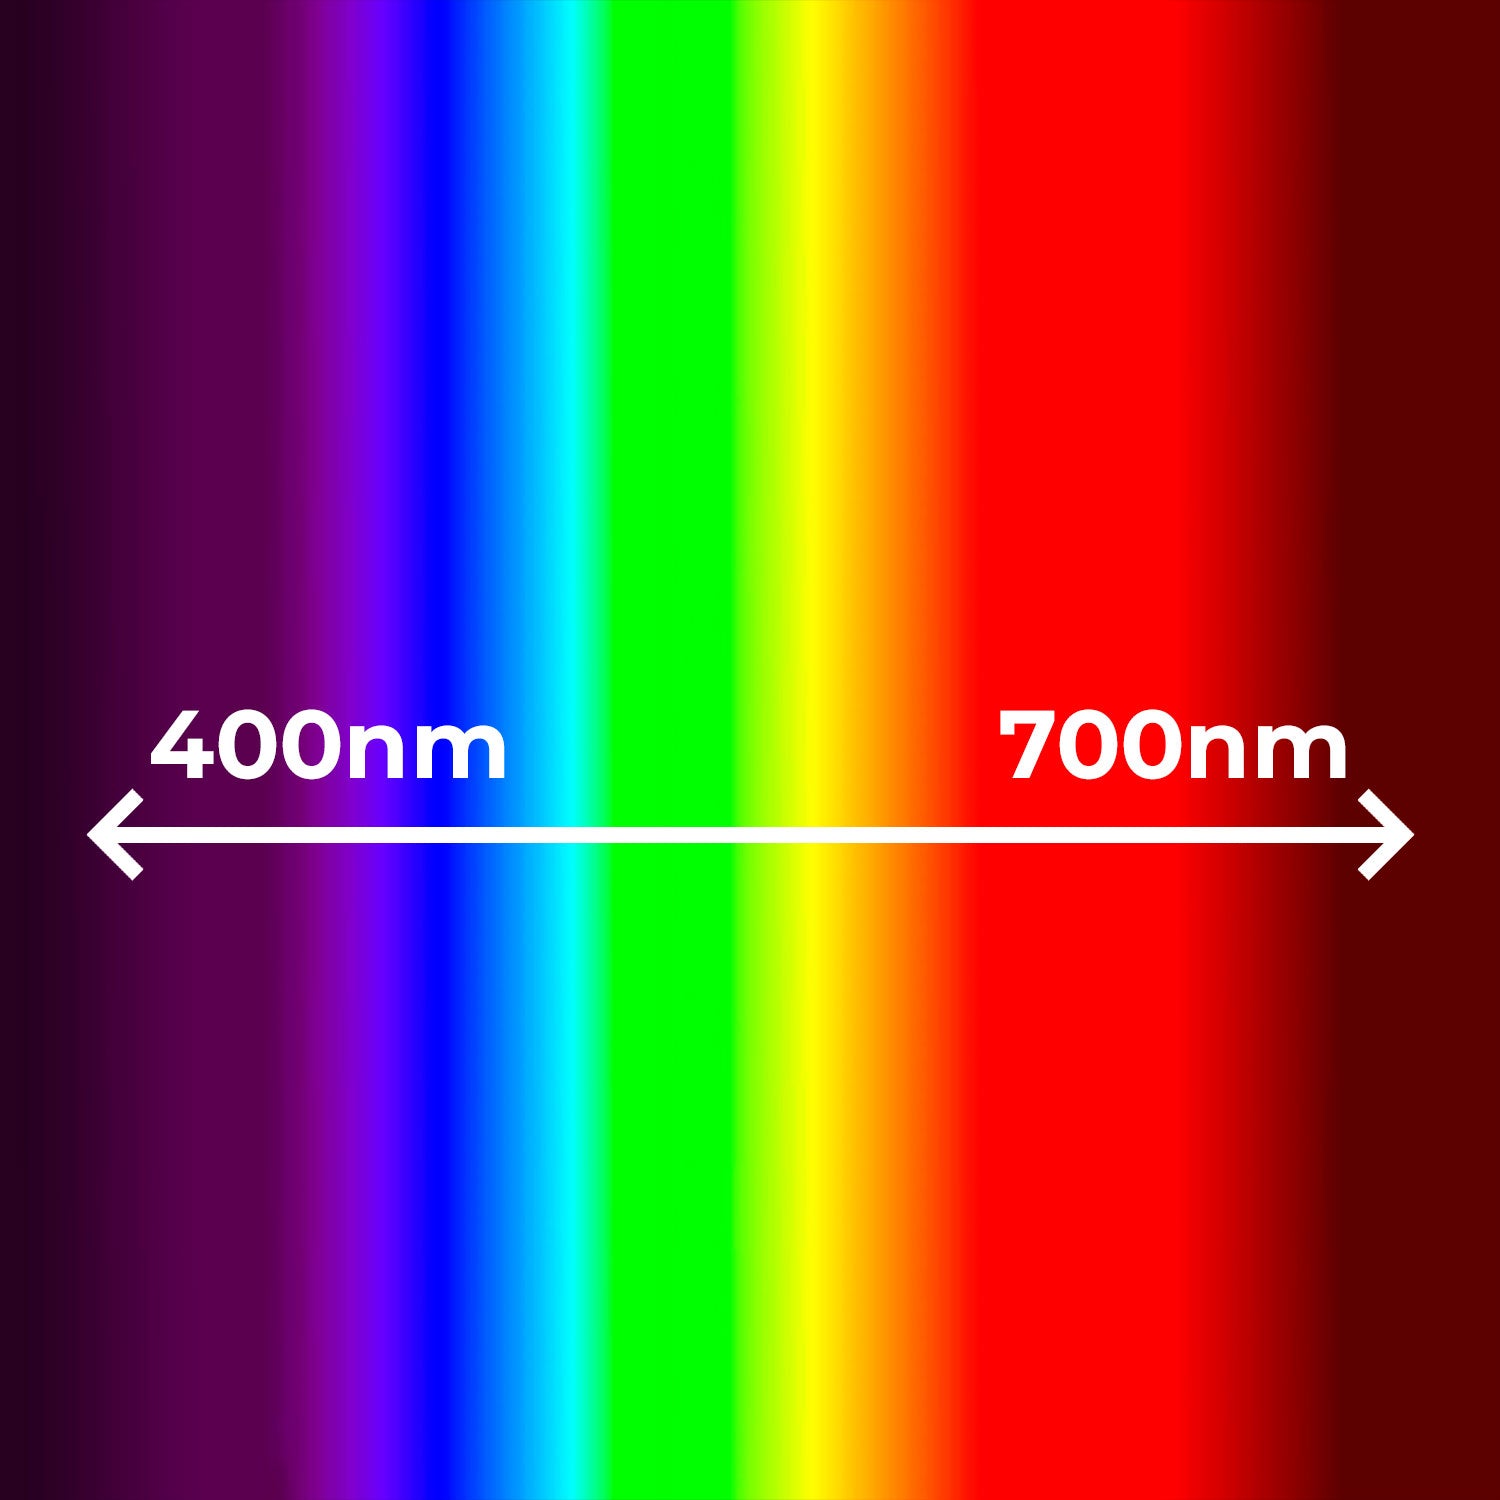 Visible spectrum of laser light